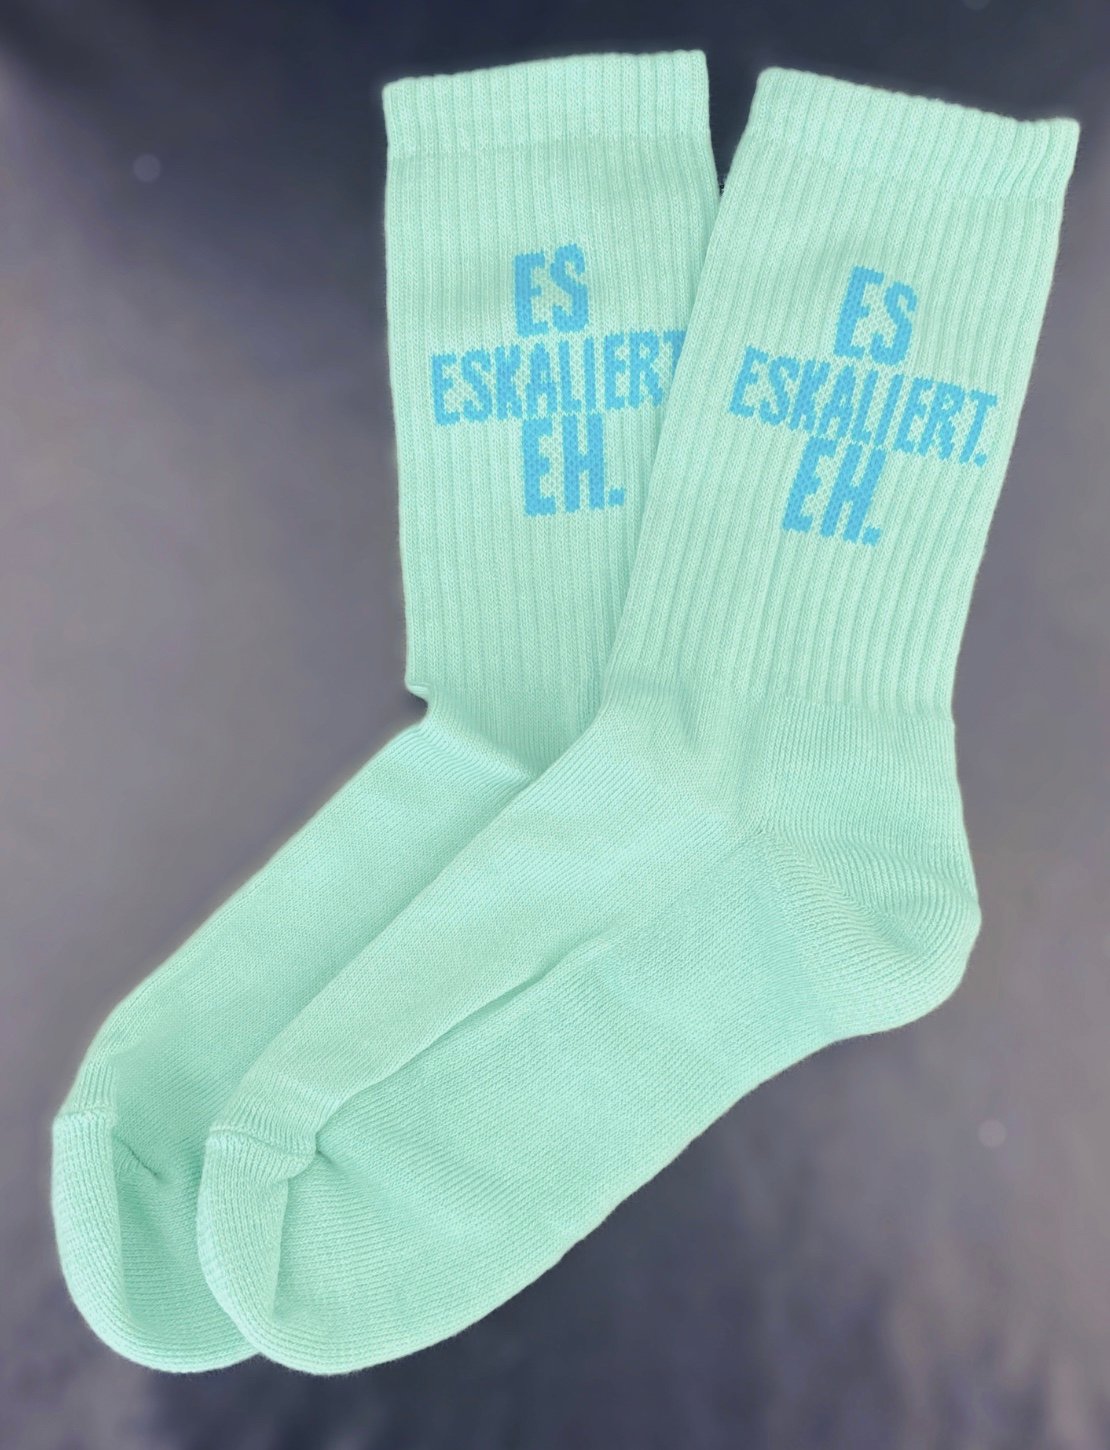 Image of "Es Eskaliert Eh" summergreen Socken!